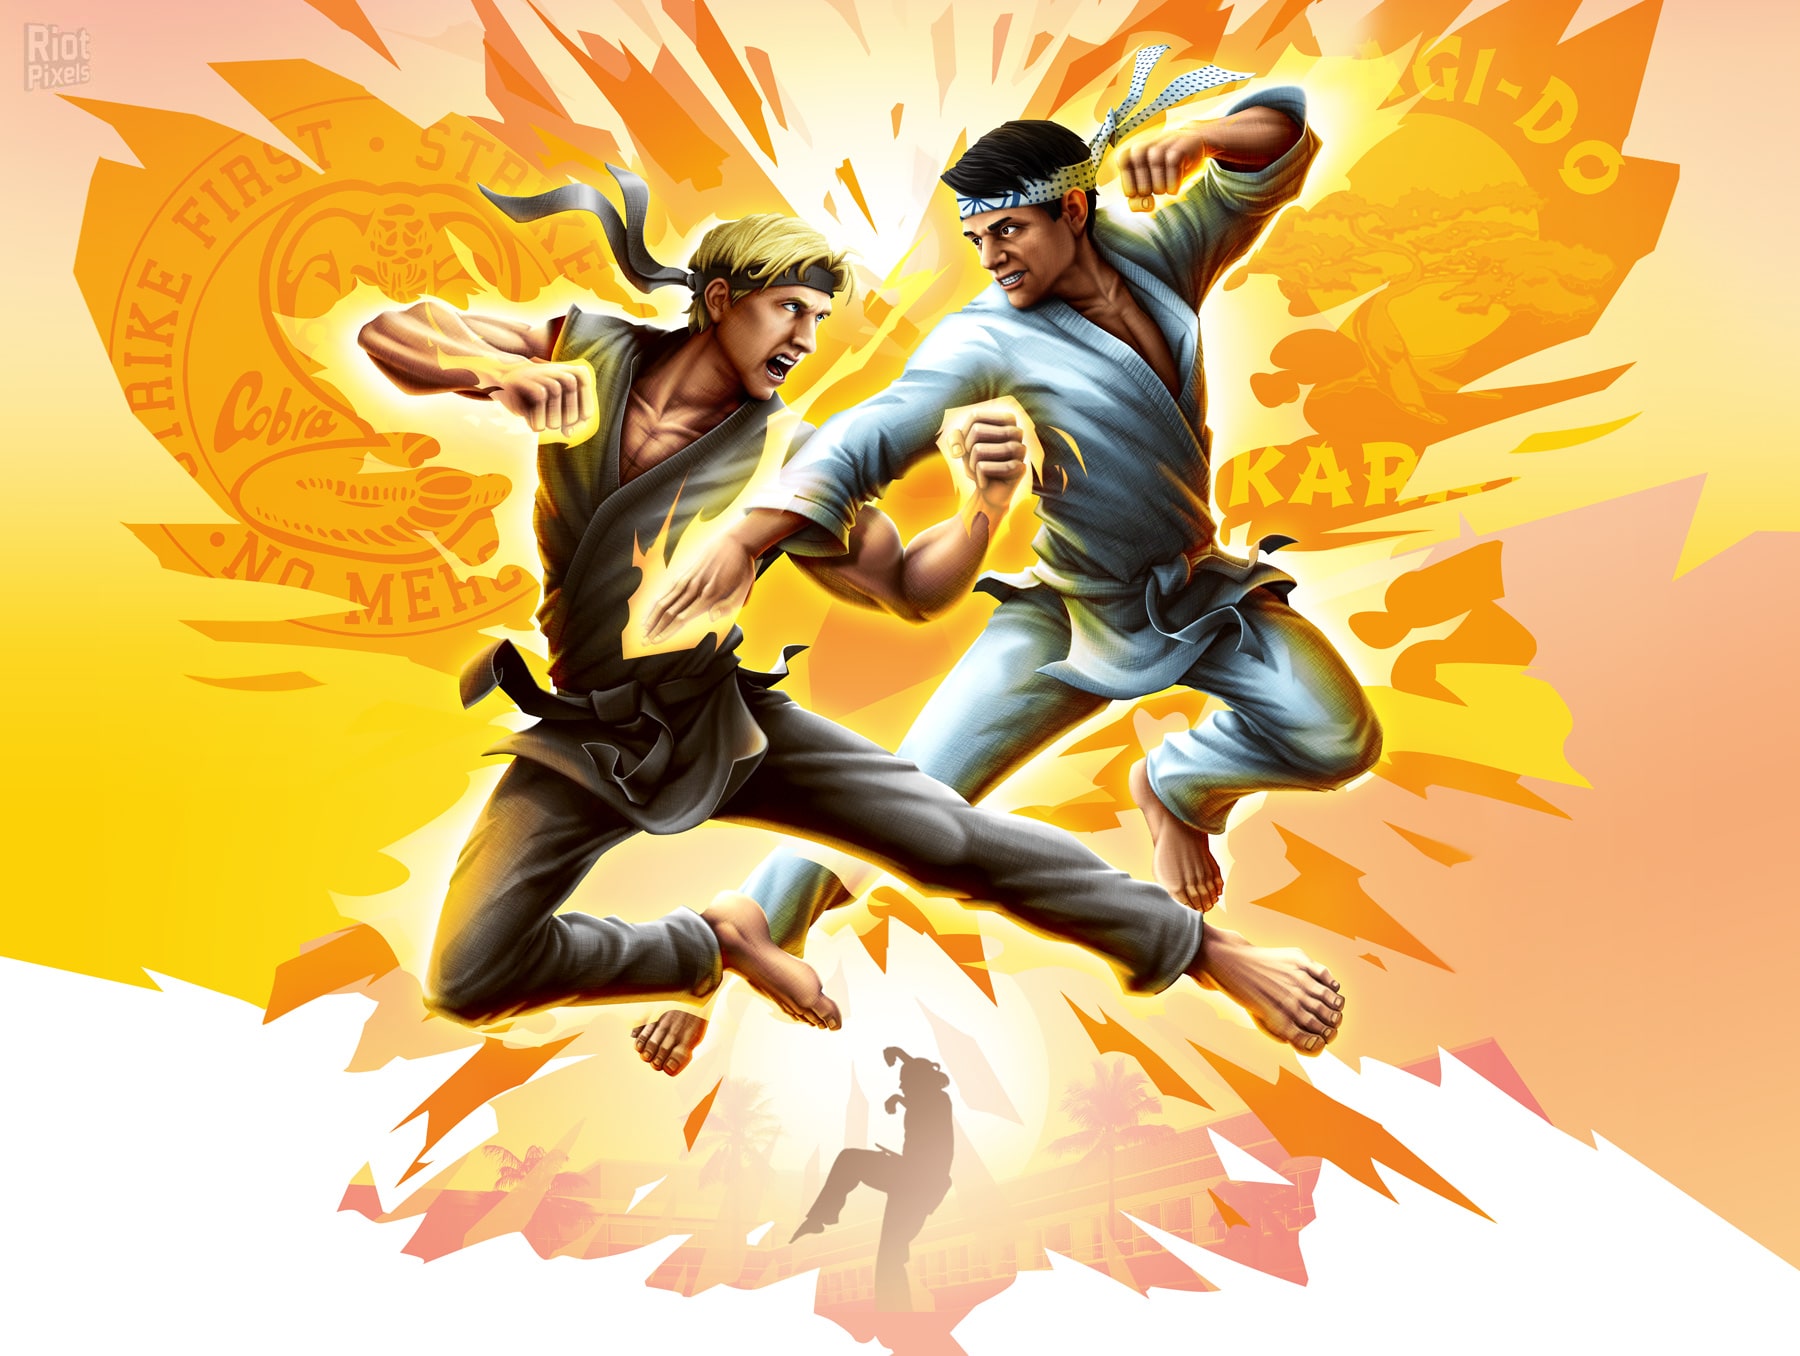 Veja imagens de 'Cobra Kai: The Karate Kid Saga Continues' - 26/10